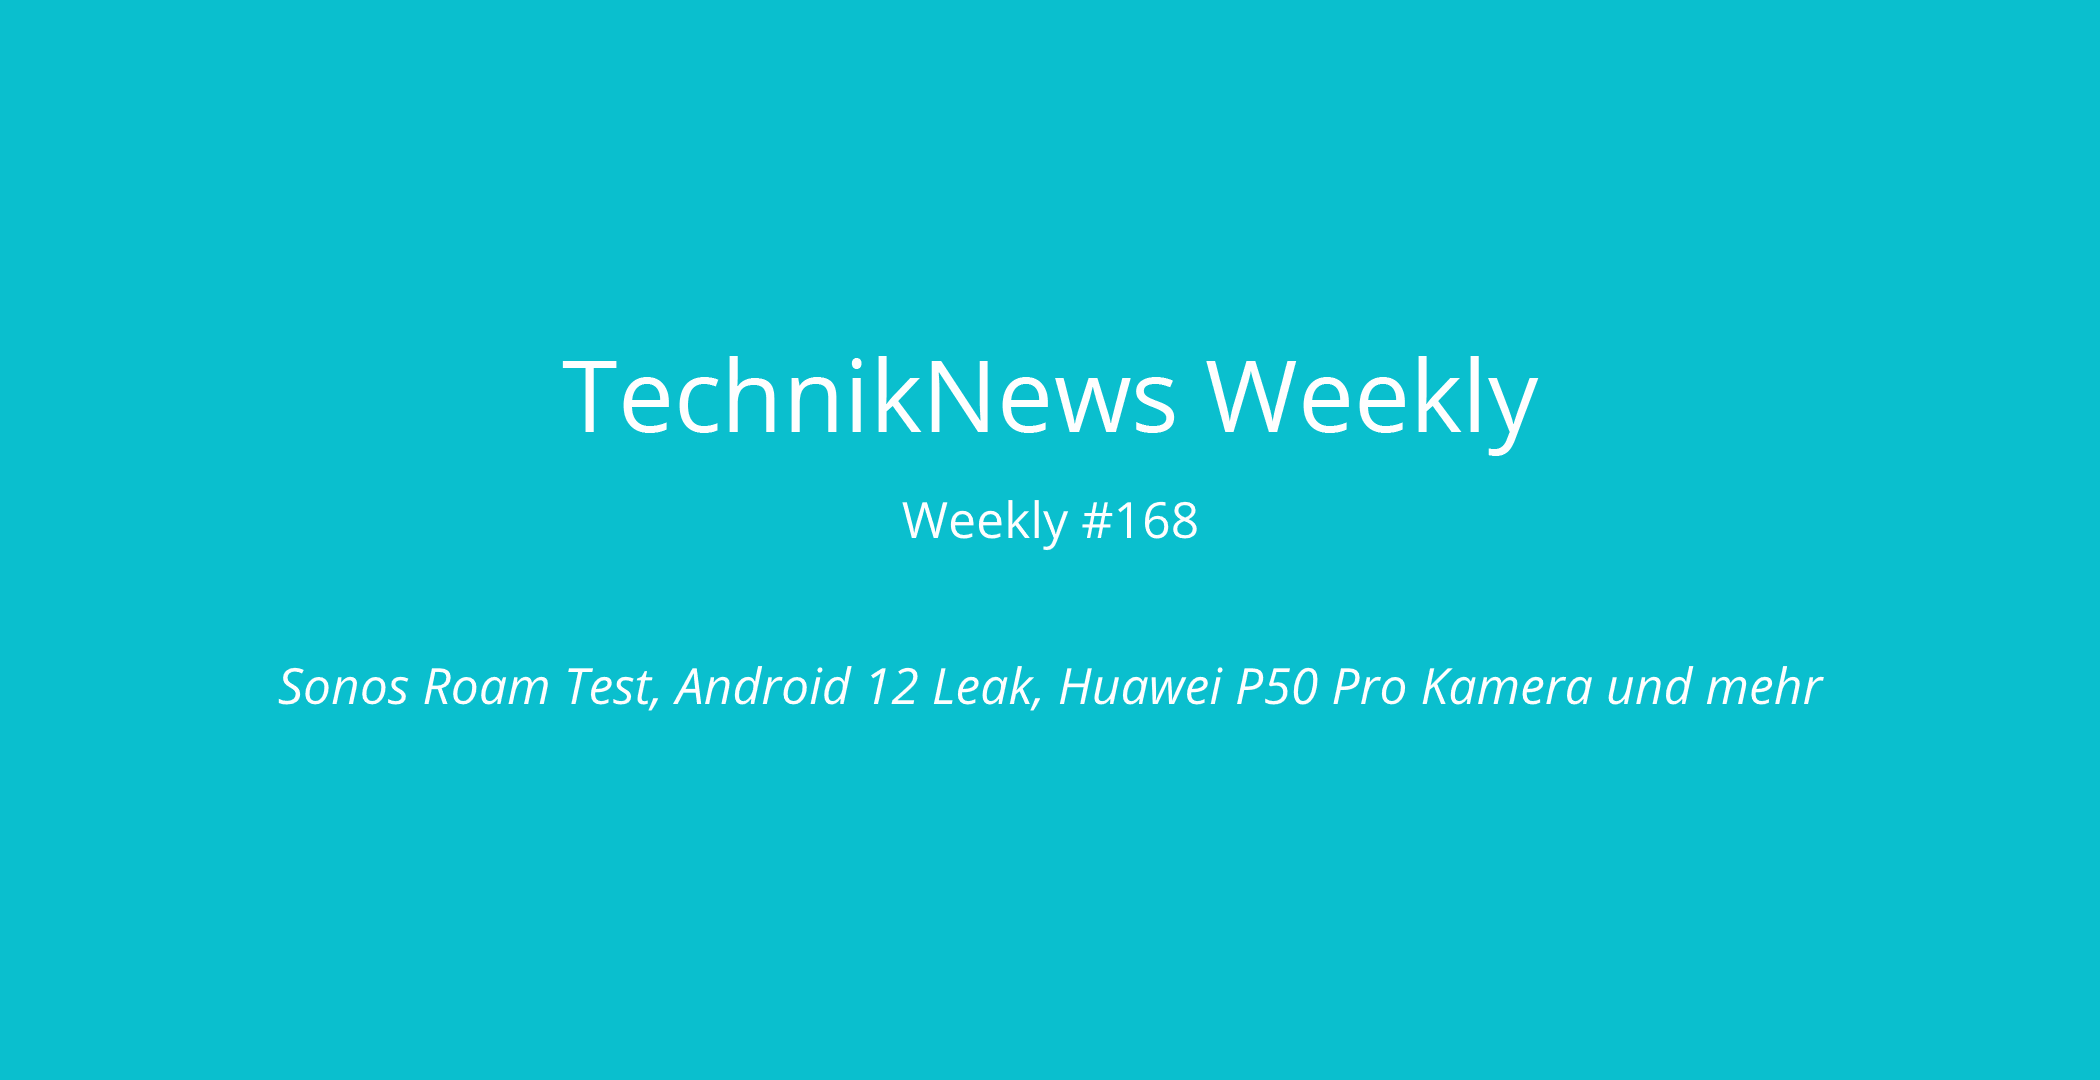 TechnikNews Weekly 168